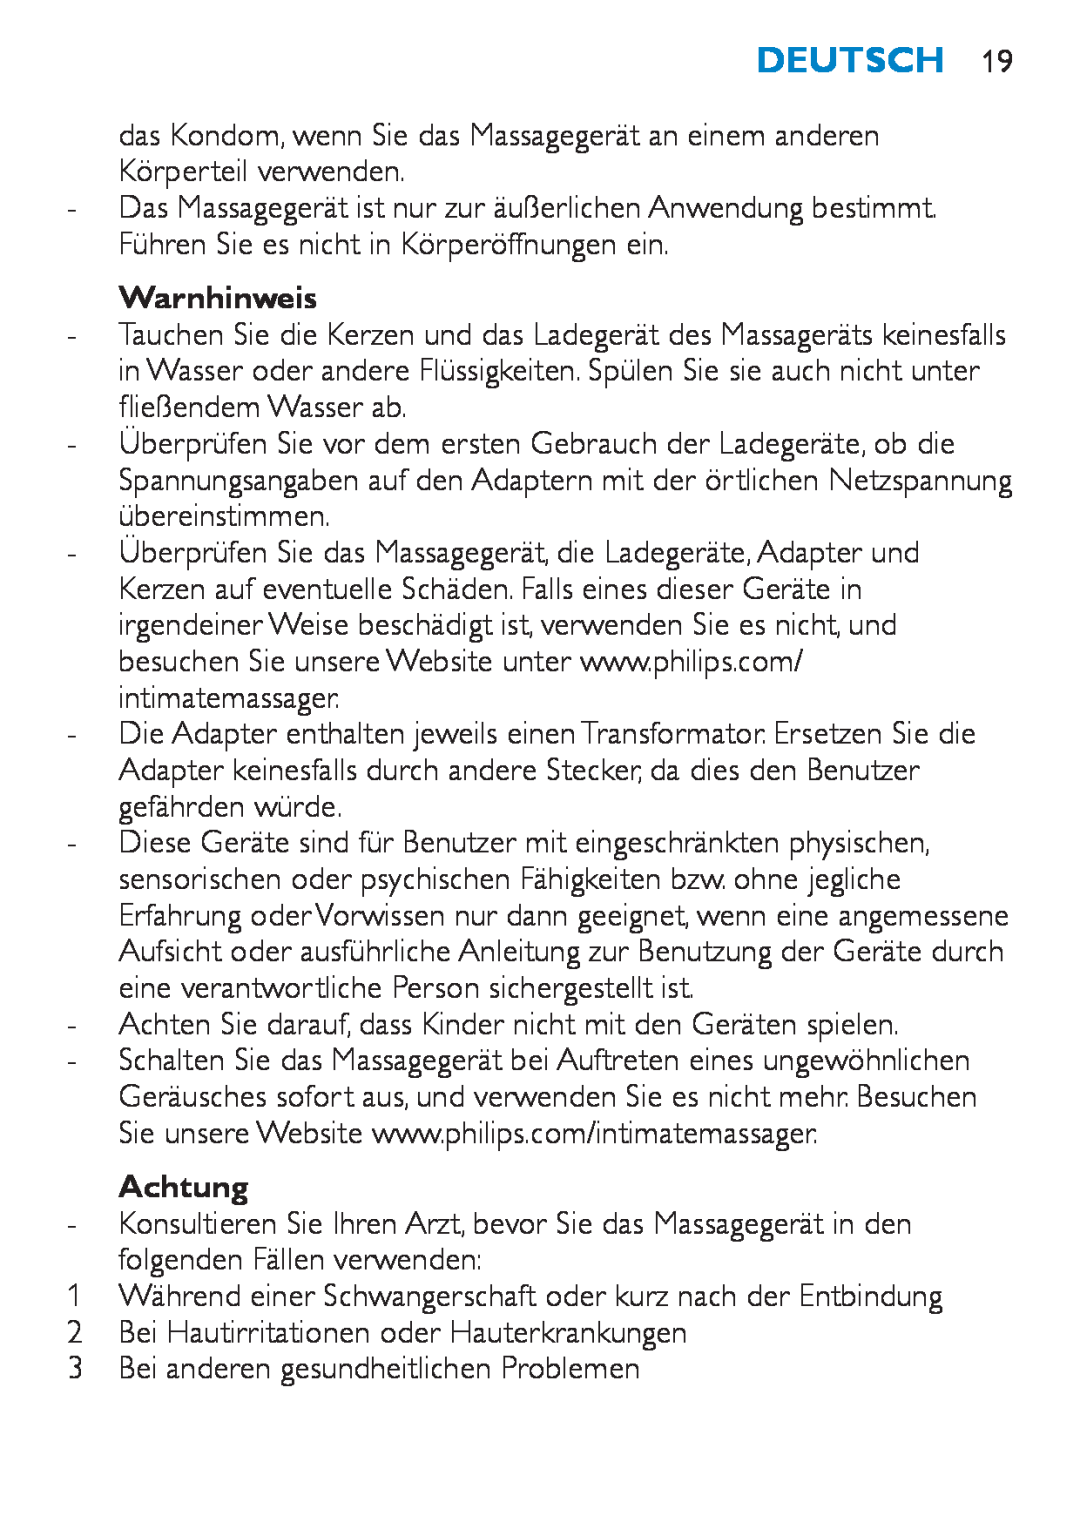 Philips HF8430 manual Deutsch, Warnhinweis, Achtung 